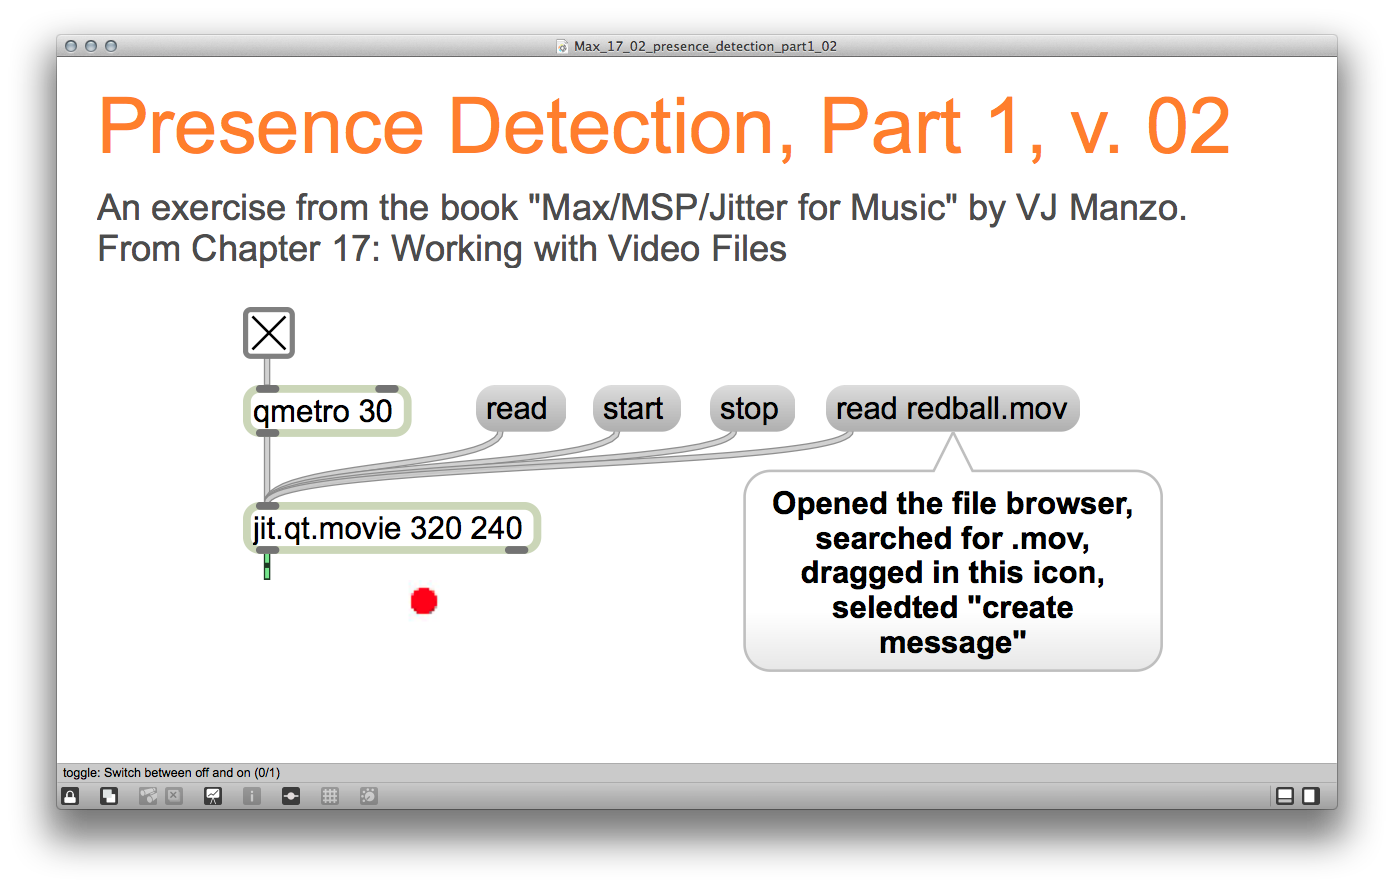 max_17_02_presence_detection_part1_02.png